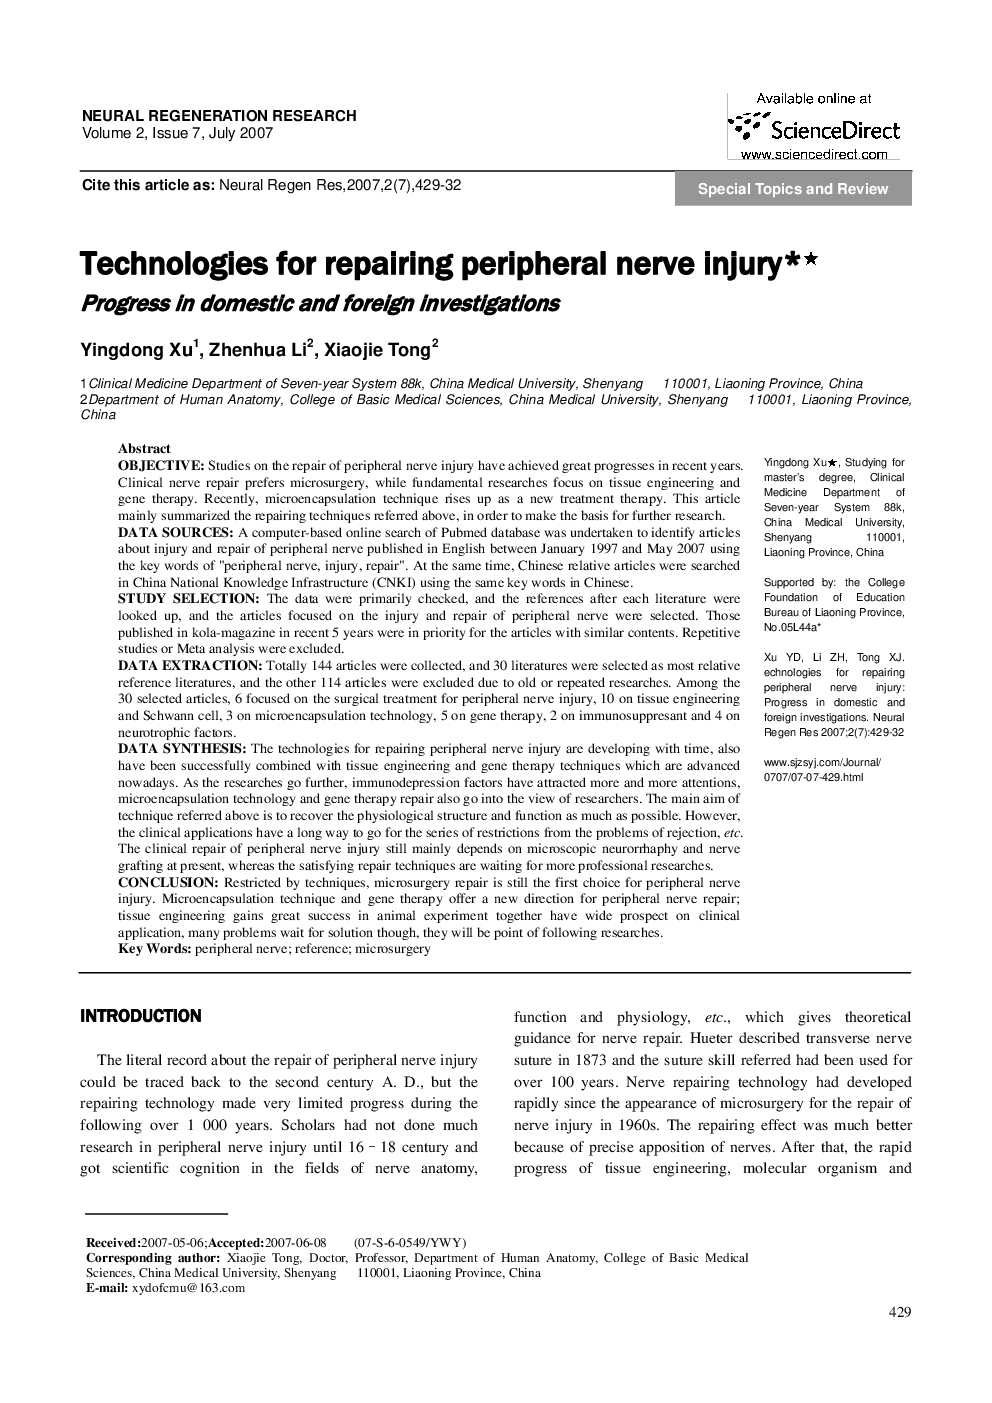 Technologies for repairing peripheral nerve injury*